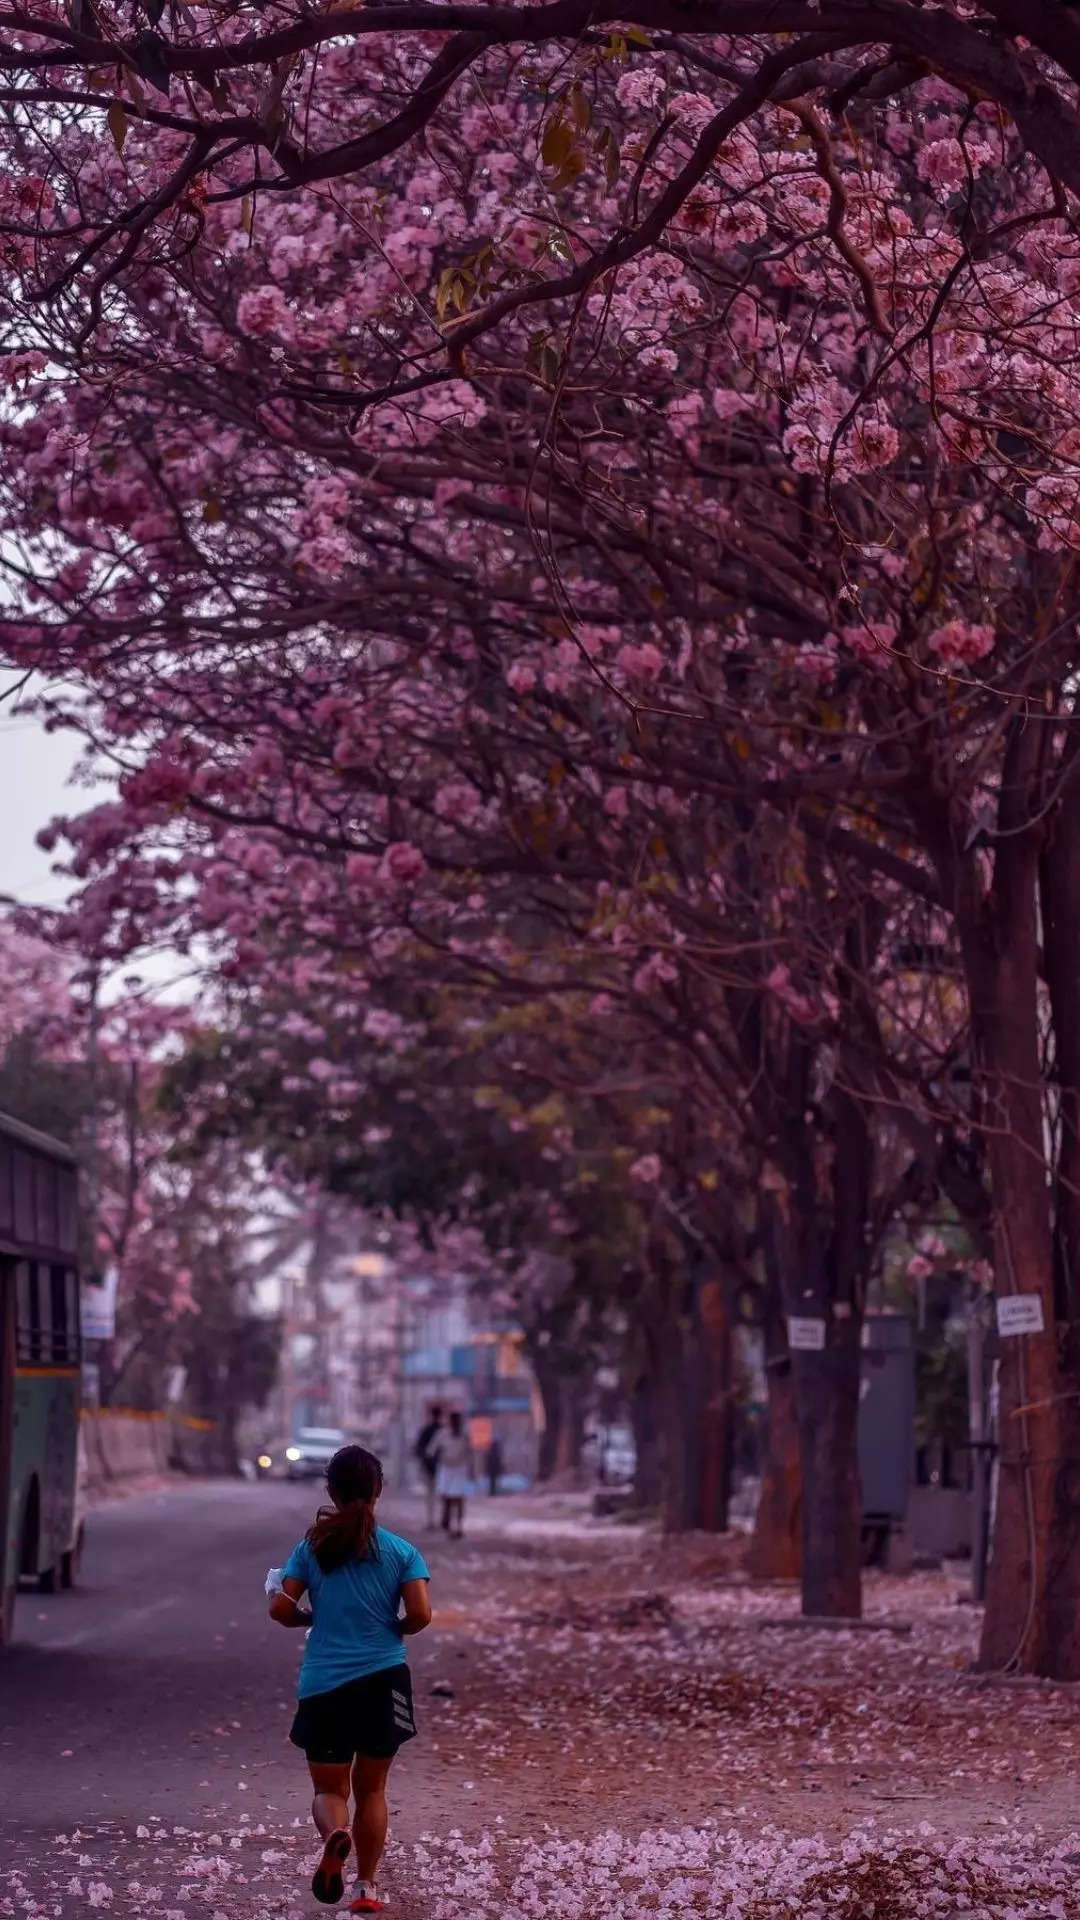 Bengaluru streets turn pink with Cherry Blossom-like flowers